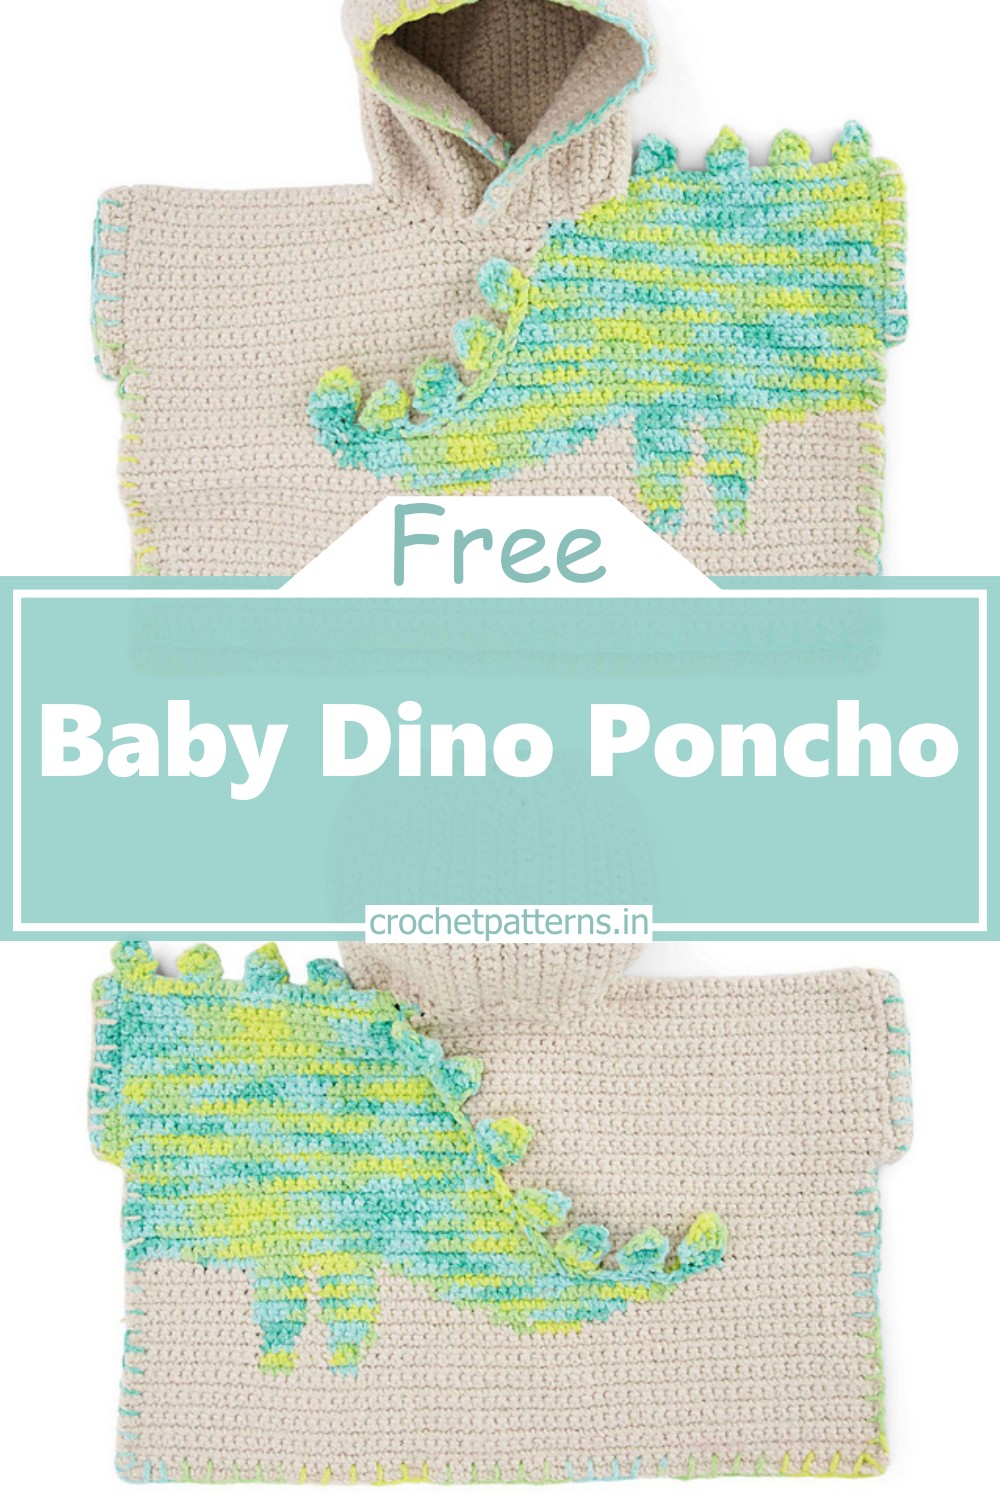 Baby Dino Poncho